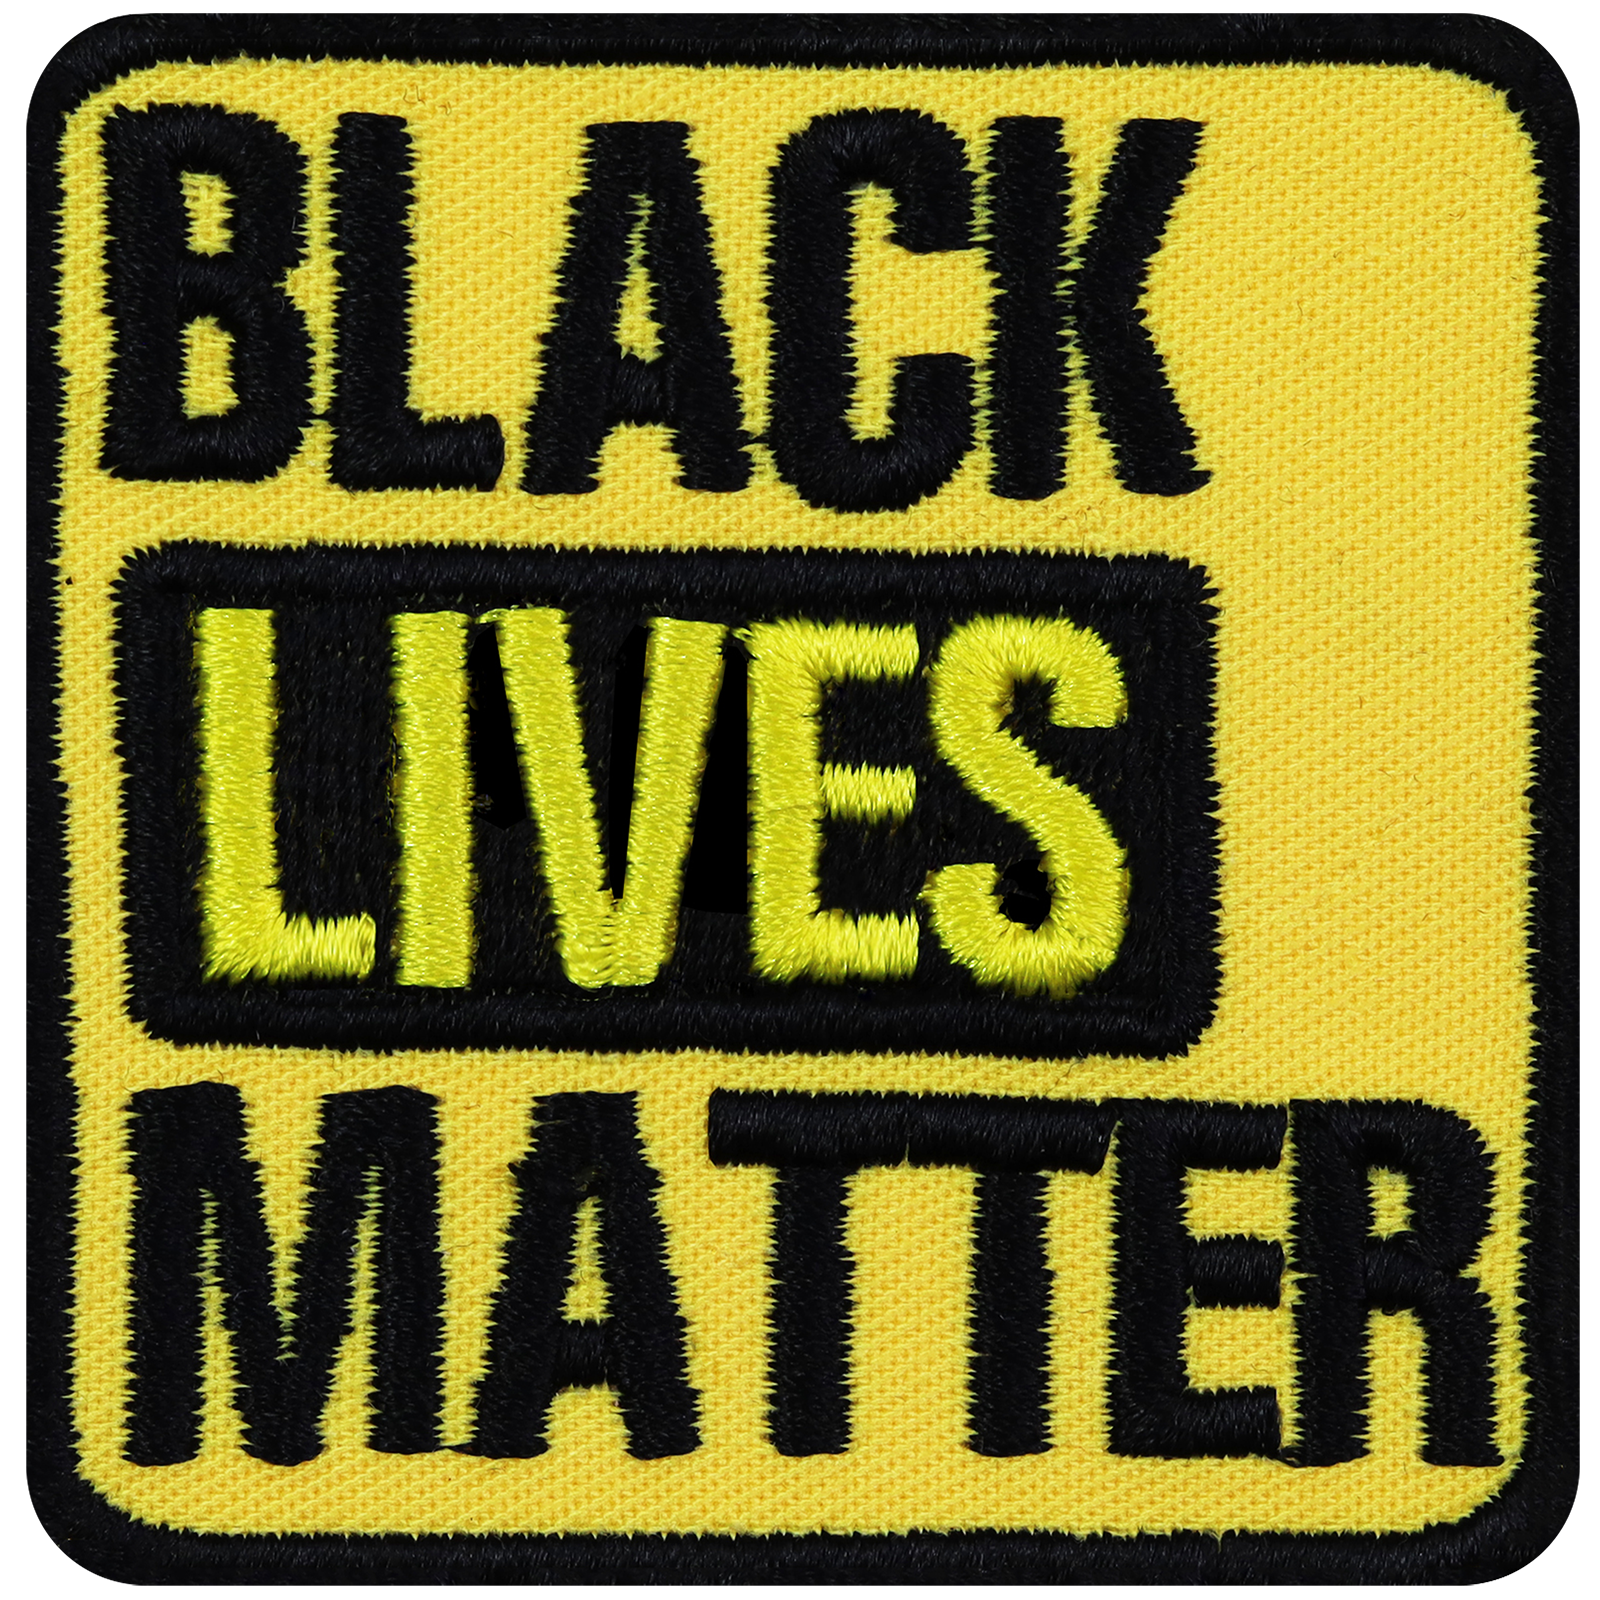 Black lives matter - Patch